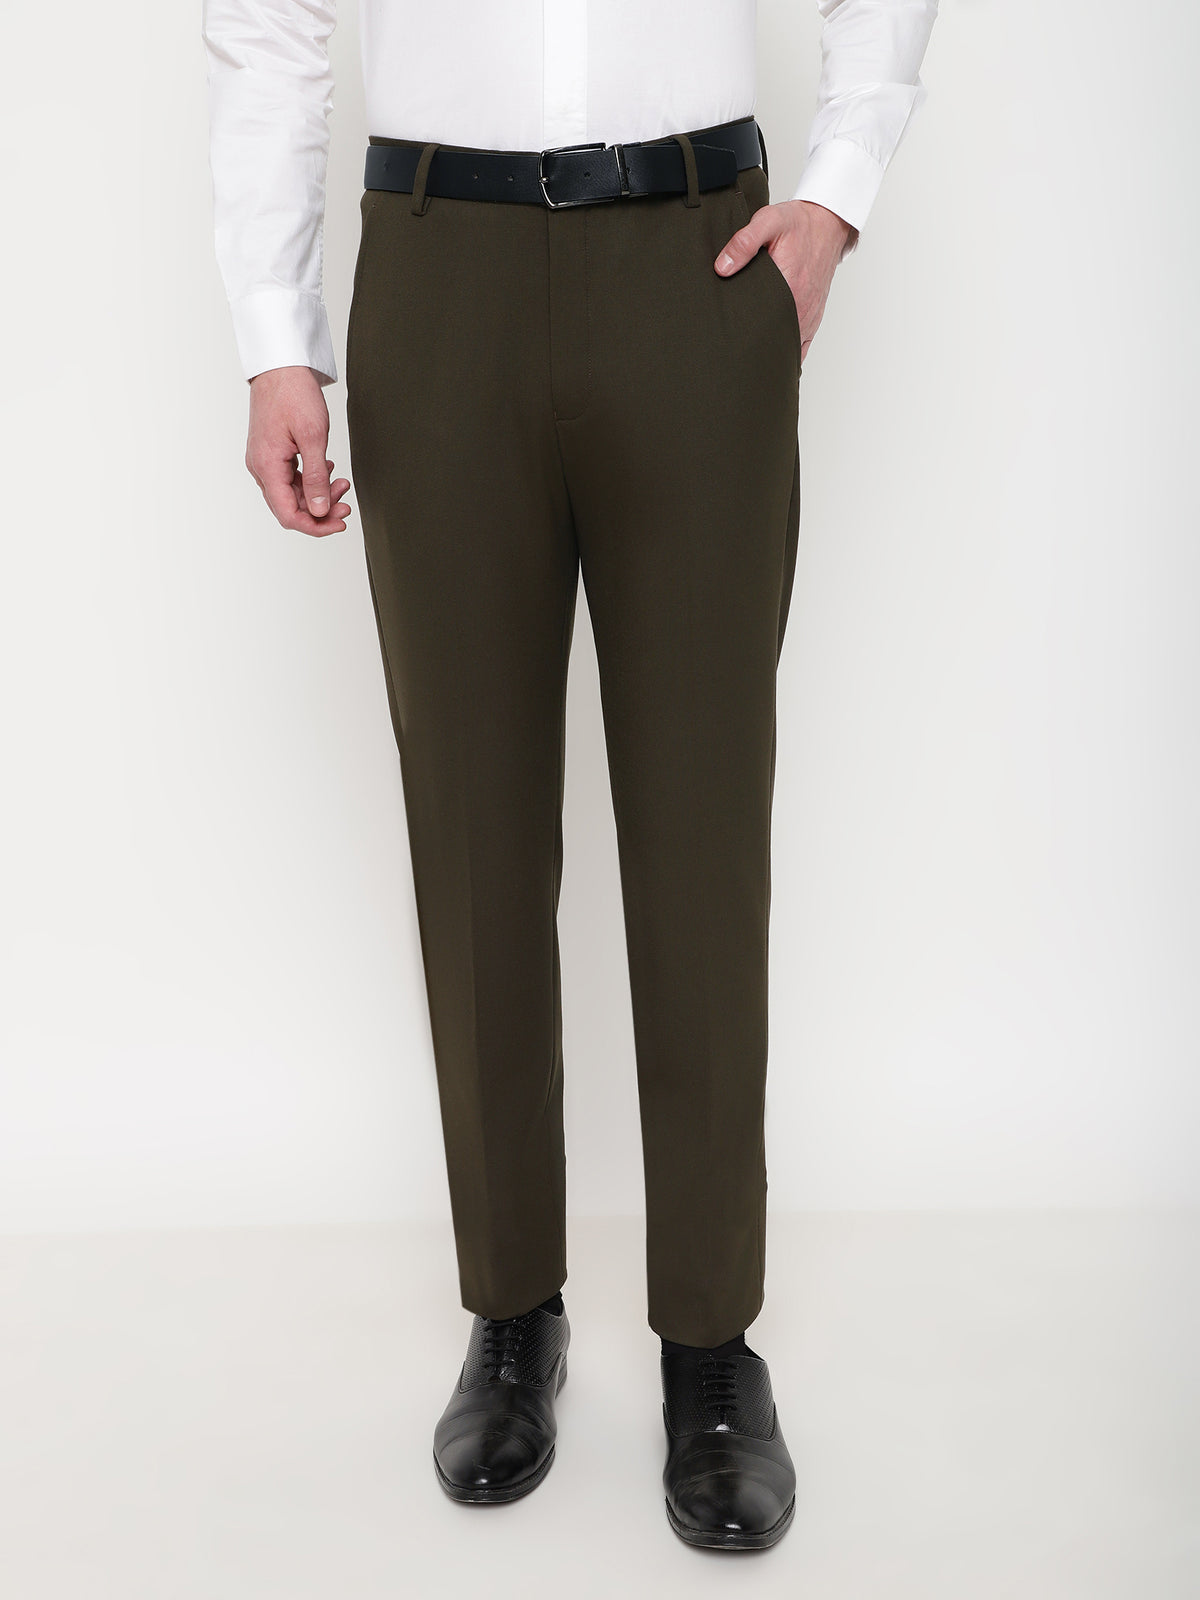 Men's 30x34 Slim Fit Dress Pants - Black | The Finery